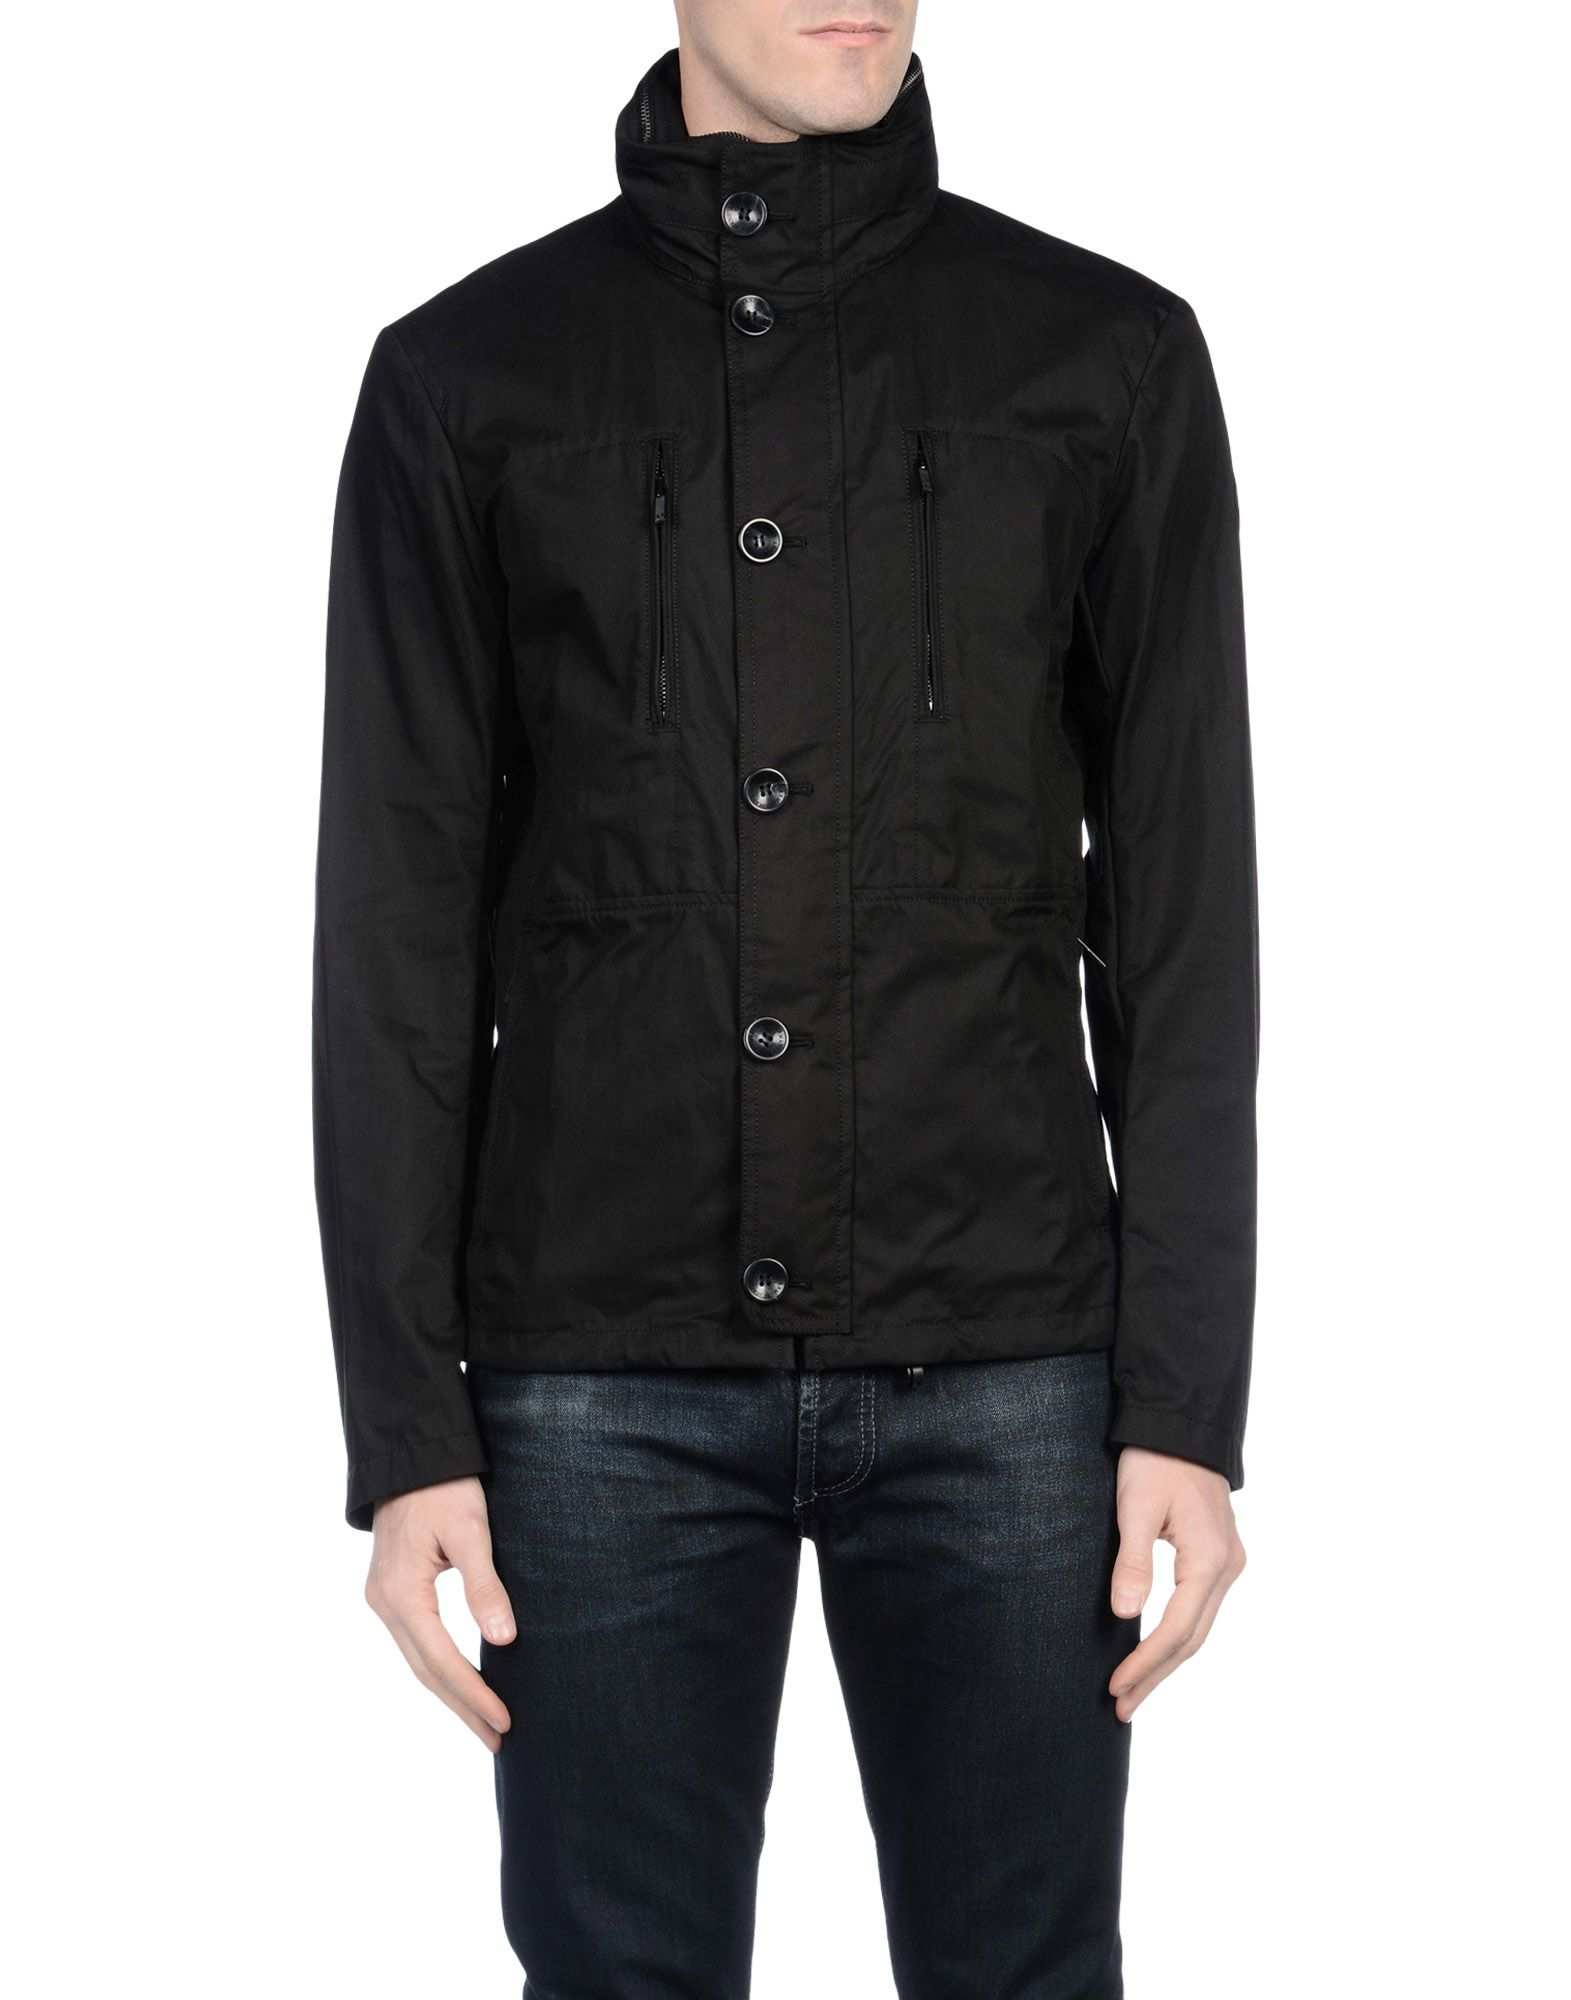 Lyst - Armani Jeans Jacket in Black for Men